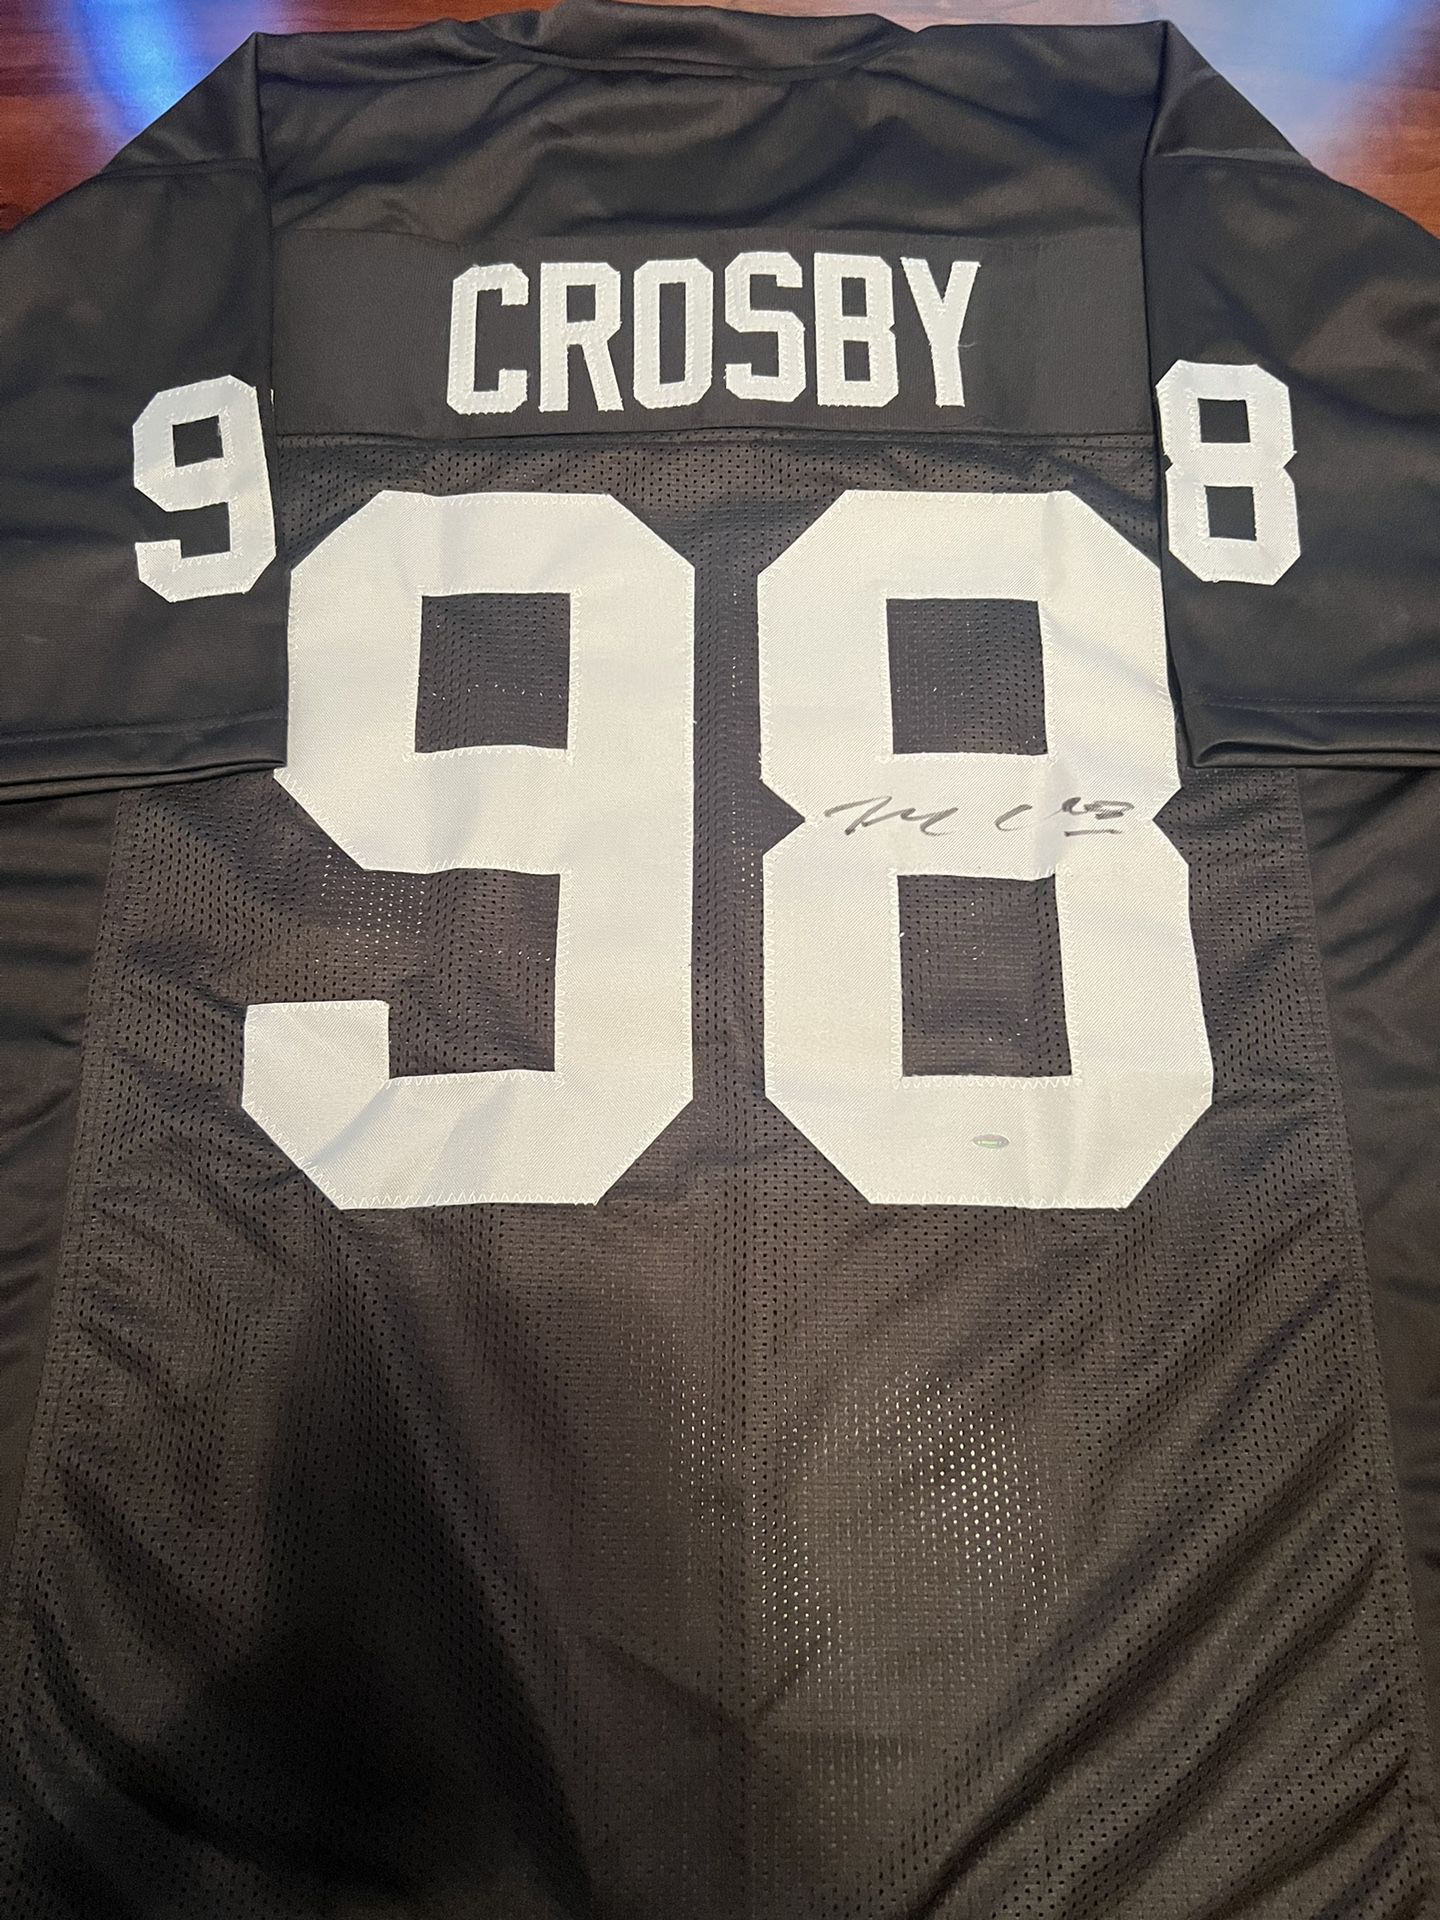 Maxx, Crosby Of The Las Vegas Raiders Signed Jersey